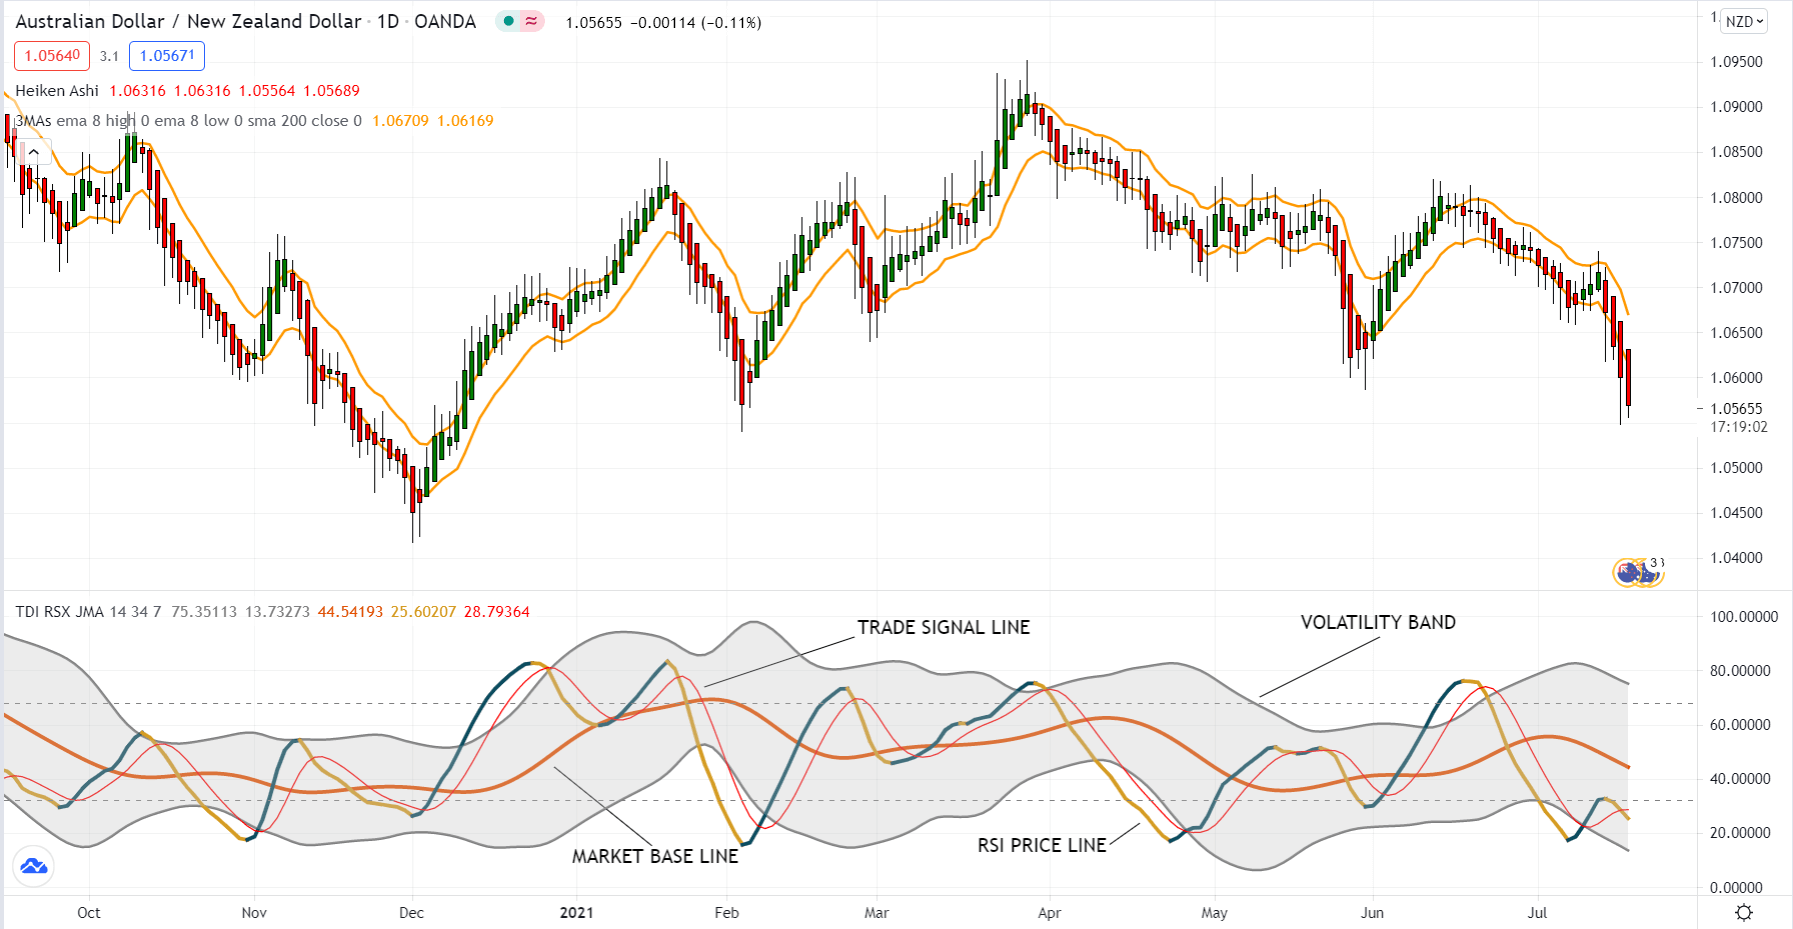 Australian Dollar/ New Zeland Dollar_1D; trade signal line,market base line, RSI line, volatility band